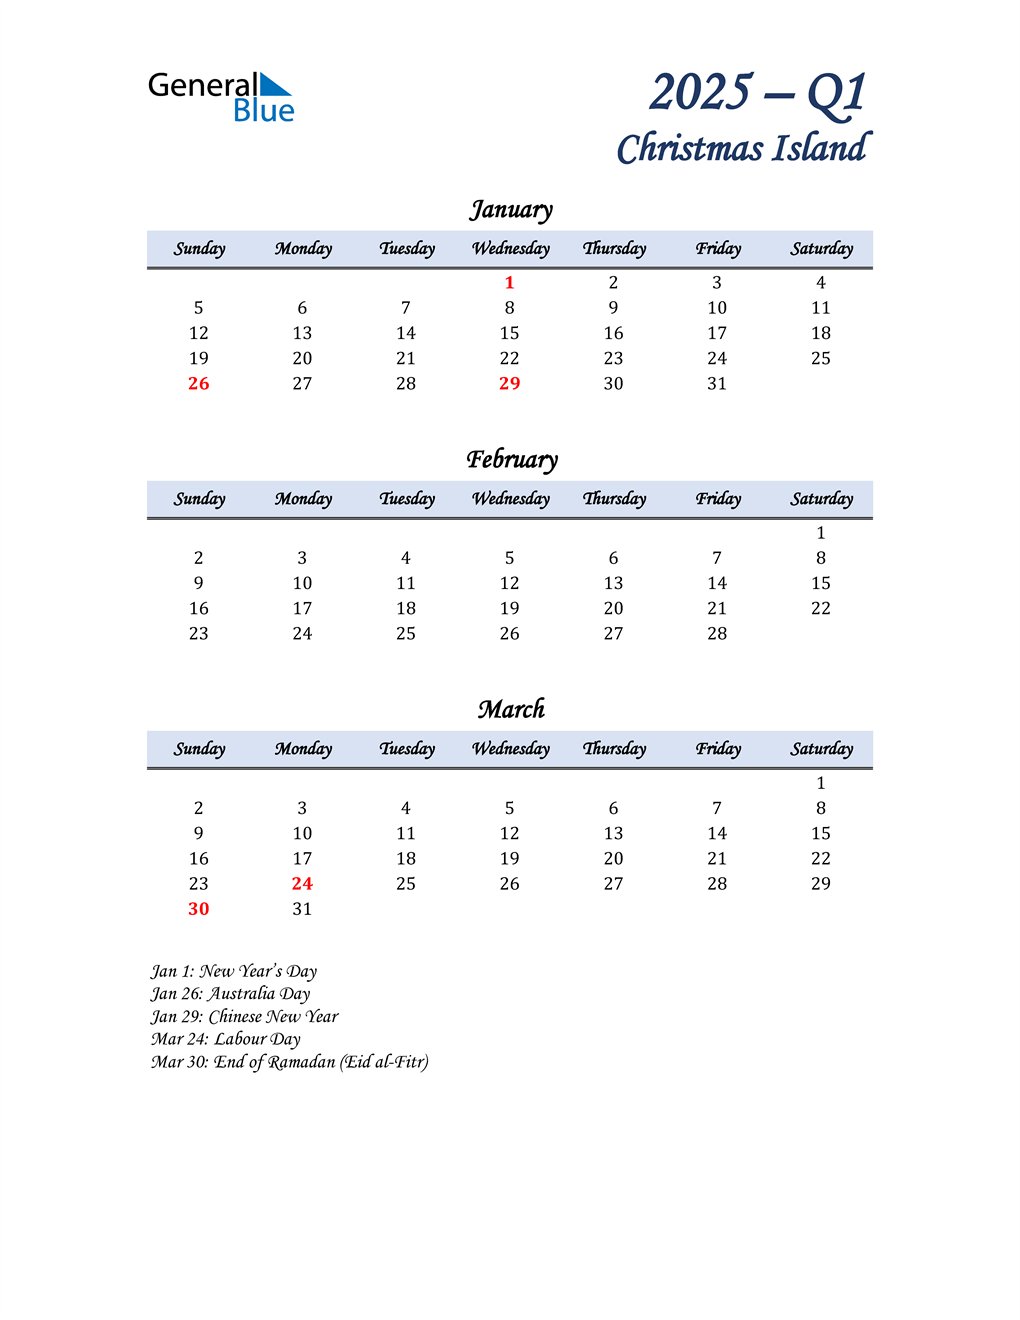  January, February, and March Calendar for Christmas Island